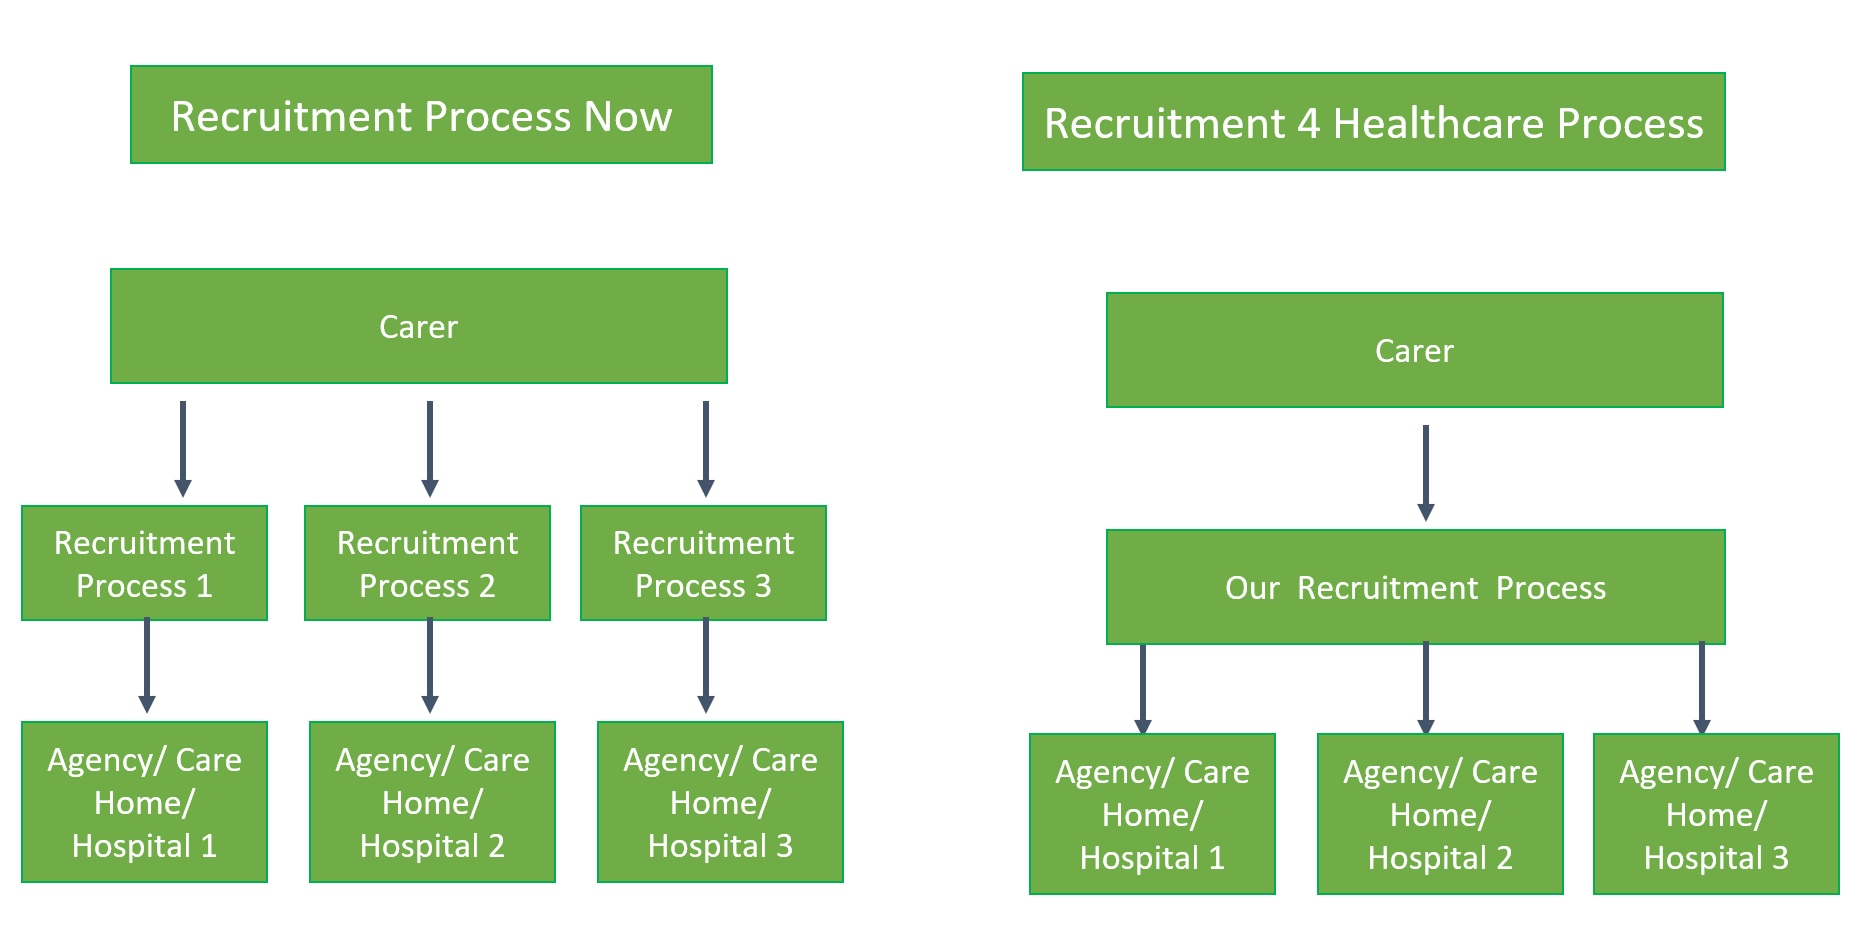 Recruitment Healthcare